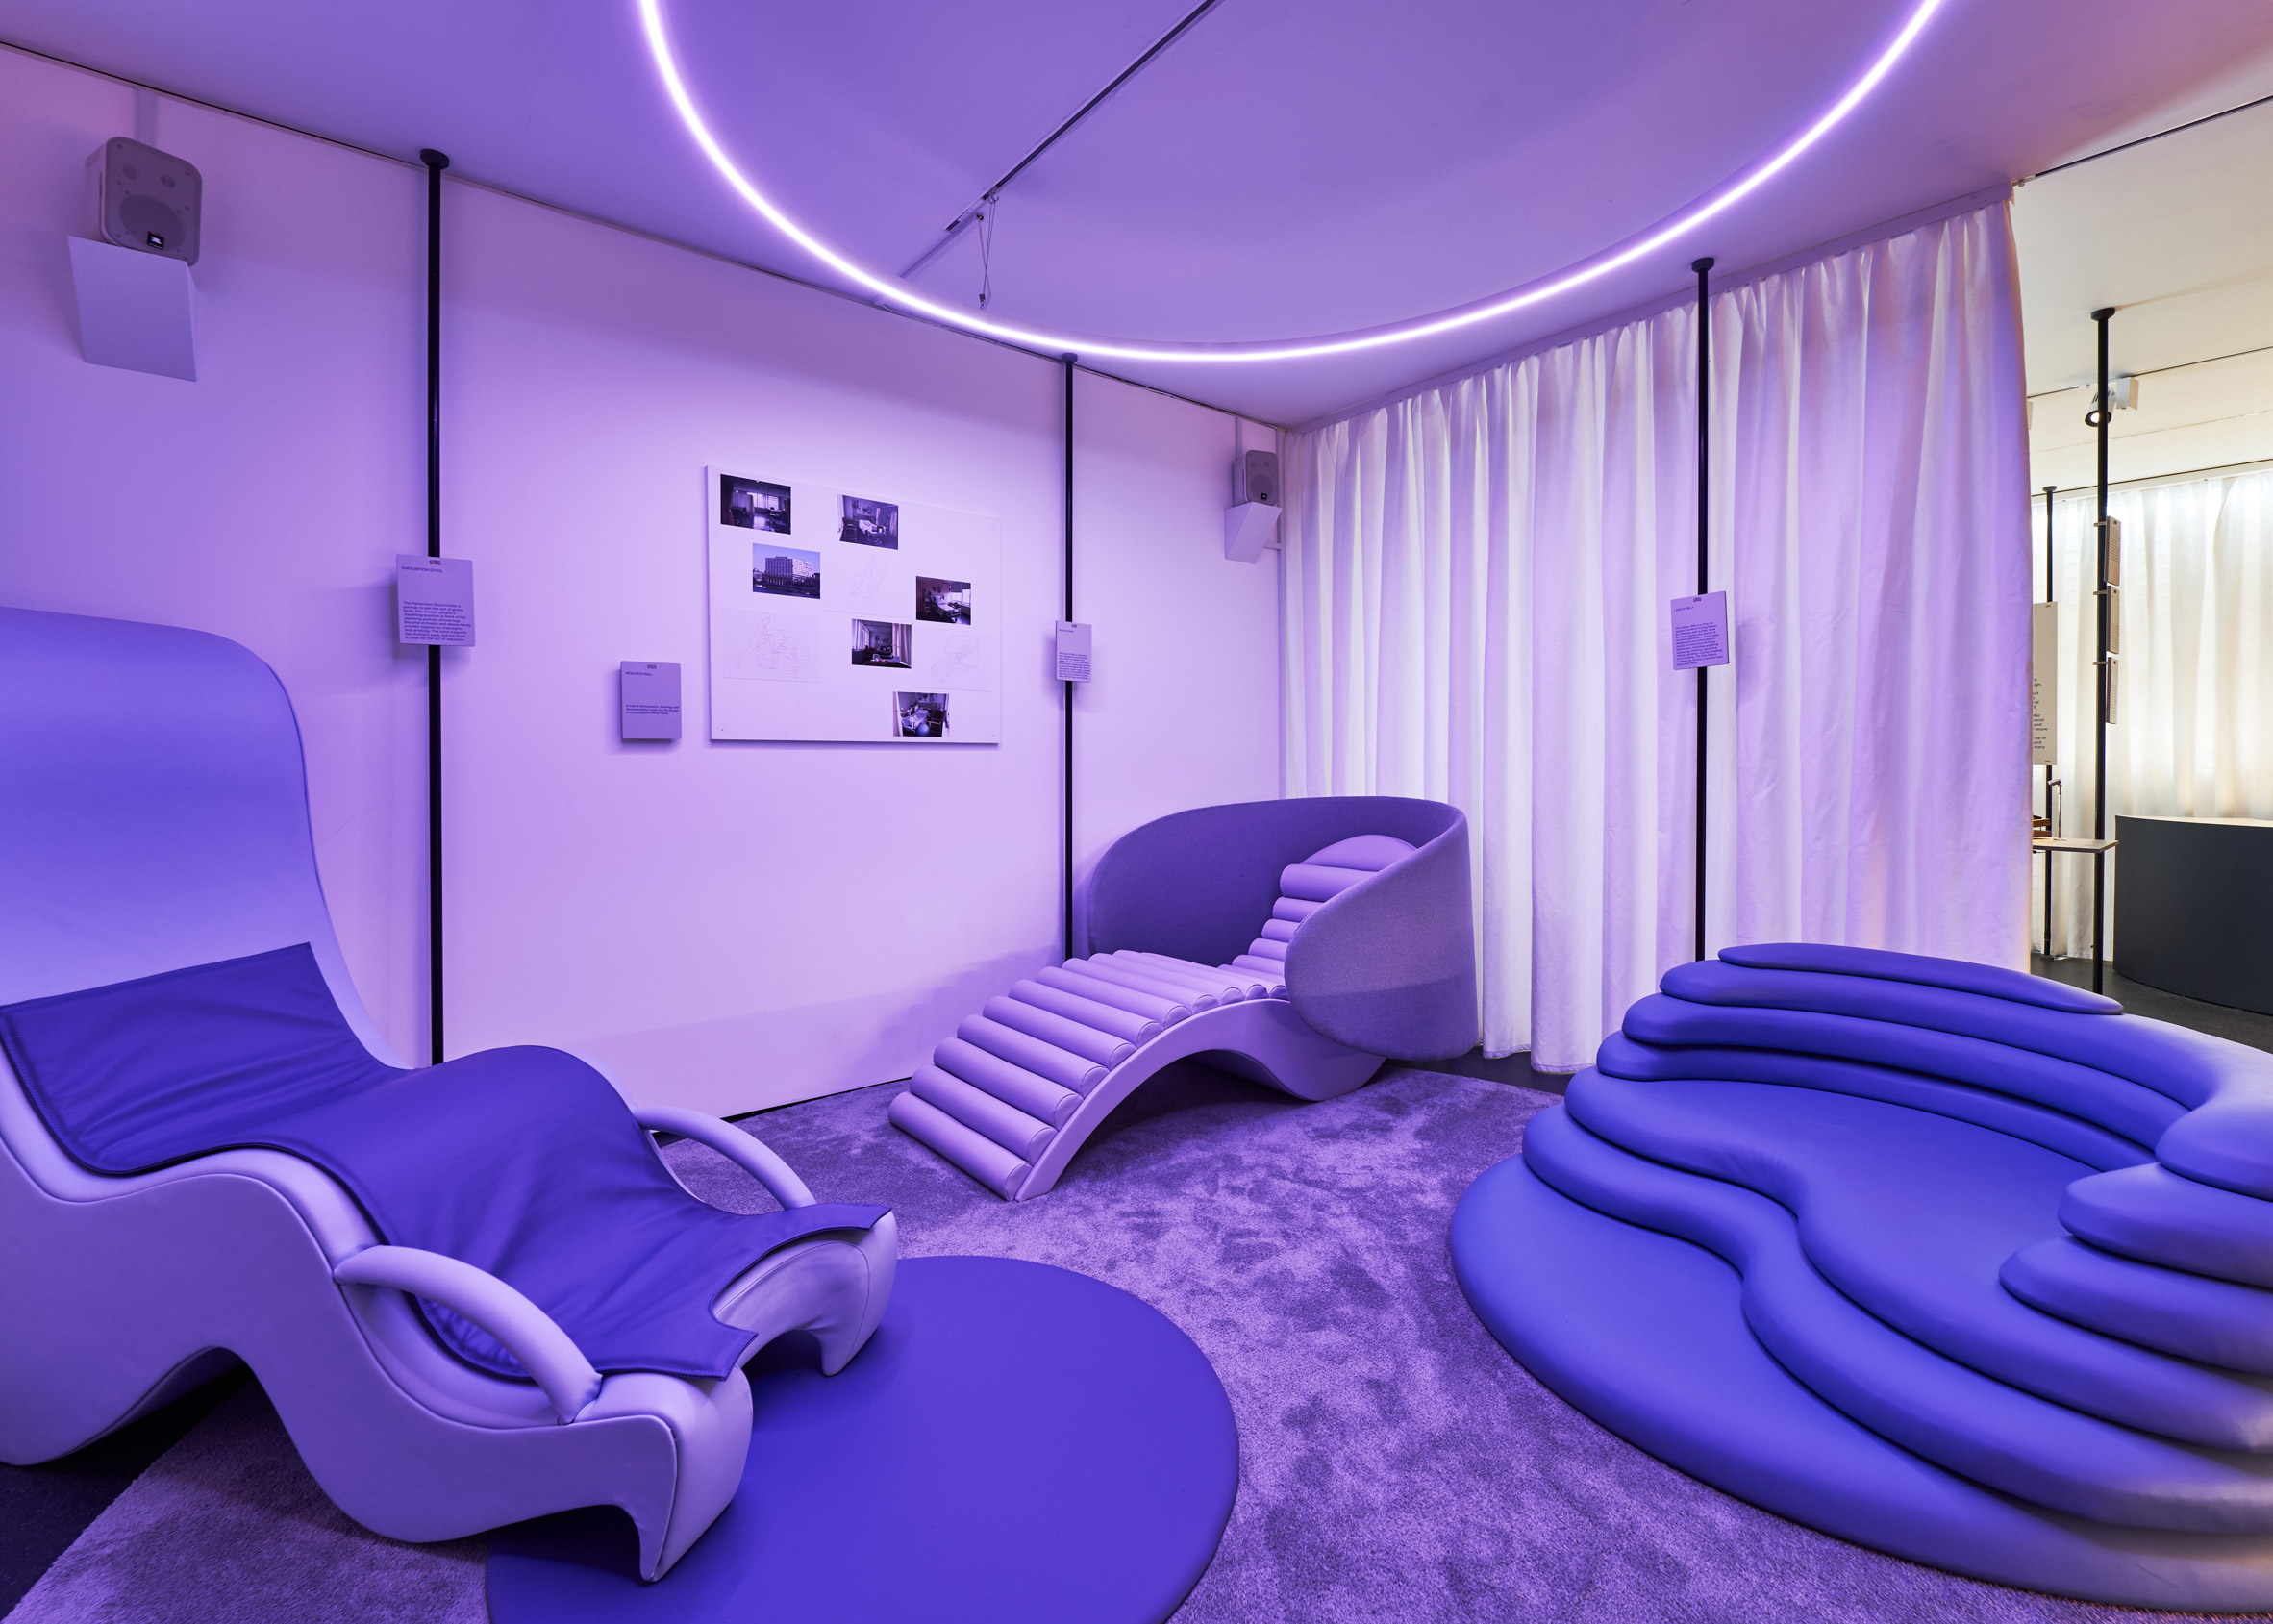 Stiliyana Minkovska's Ultima Thule project reimagines hospital maternity wards as "interstellar" spaces